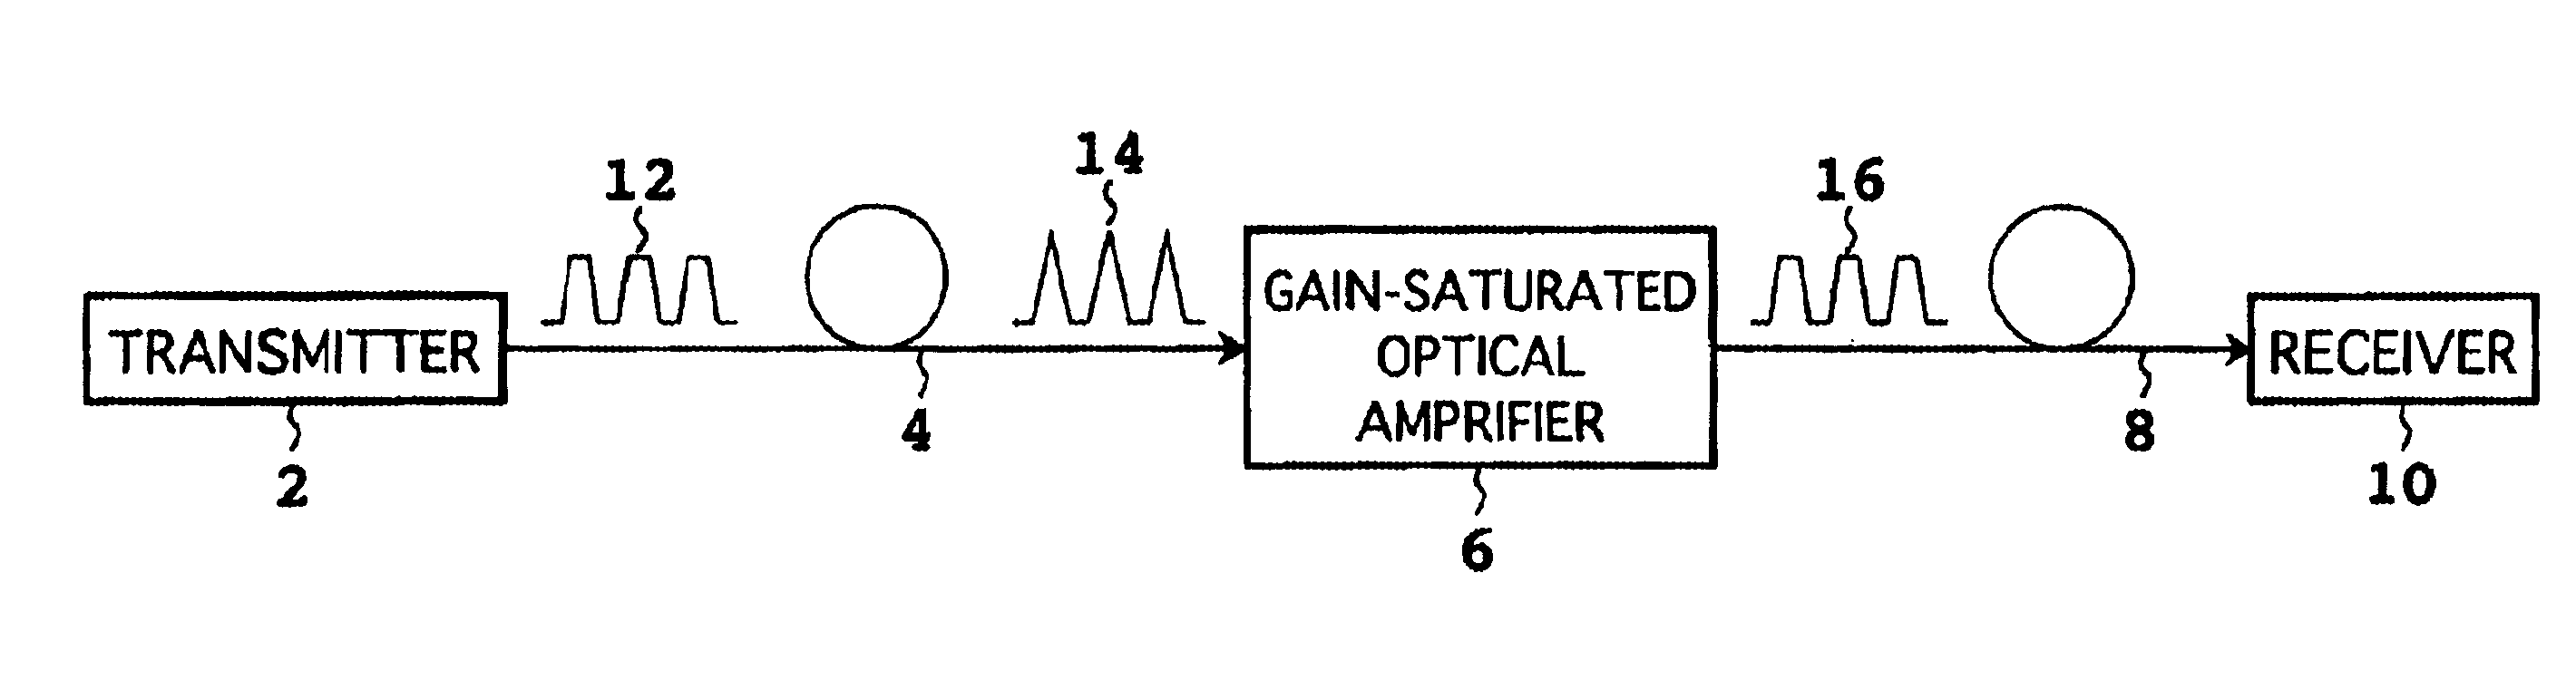 Method, optical device, and system for optical fiber transmission